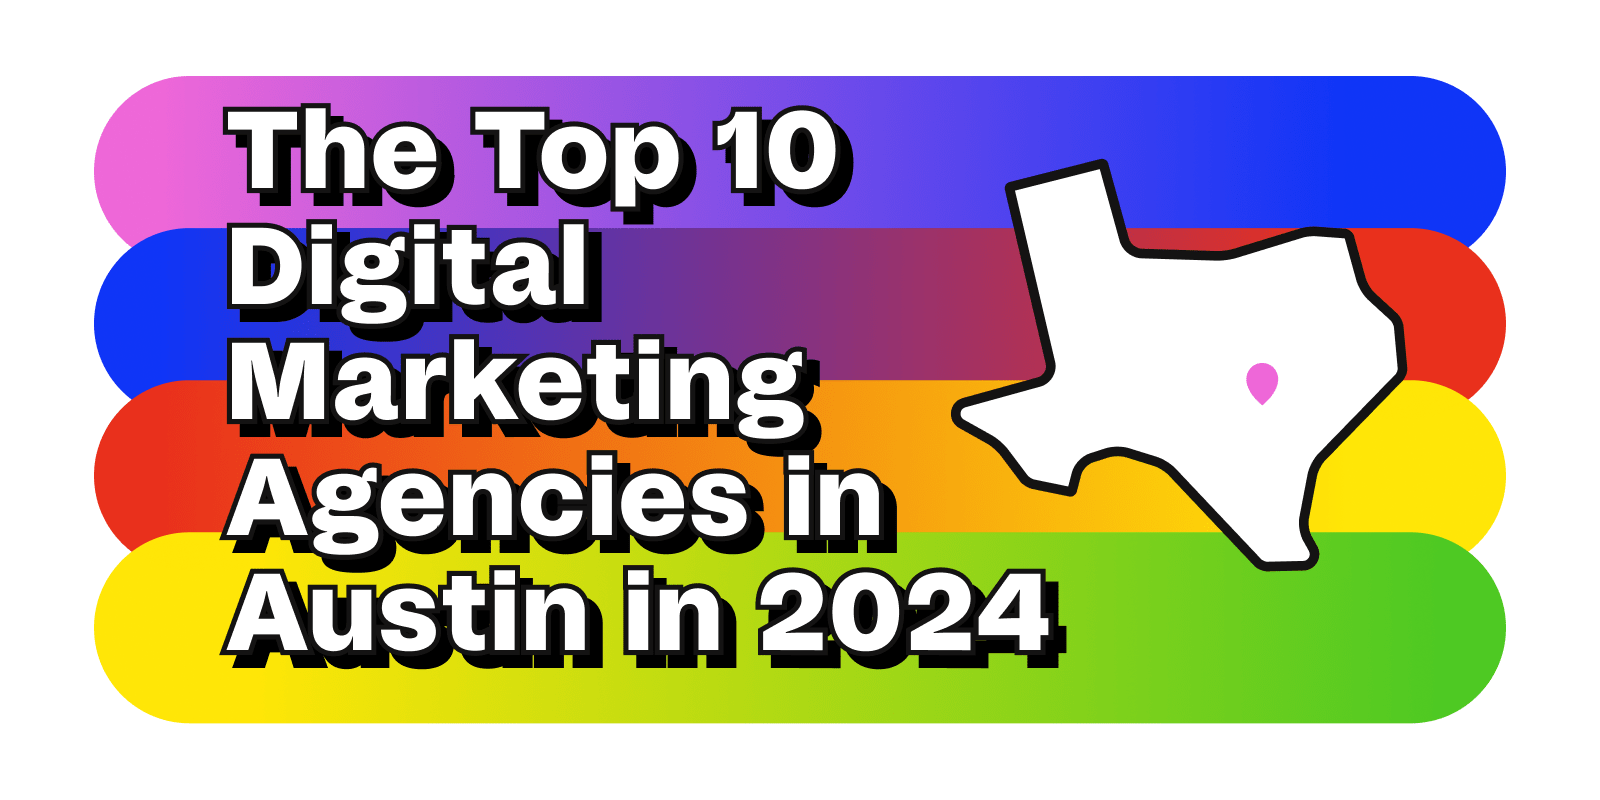 Digital marketing agencies in Austin